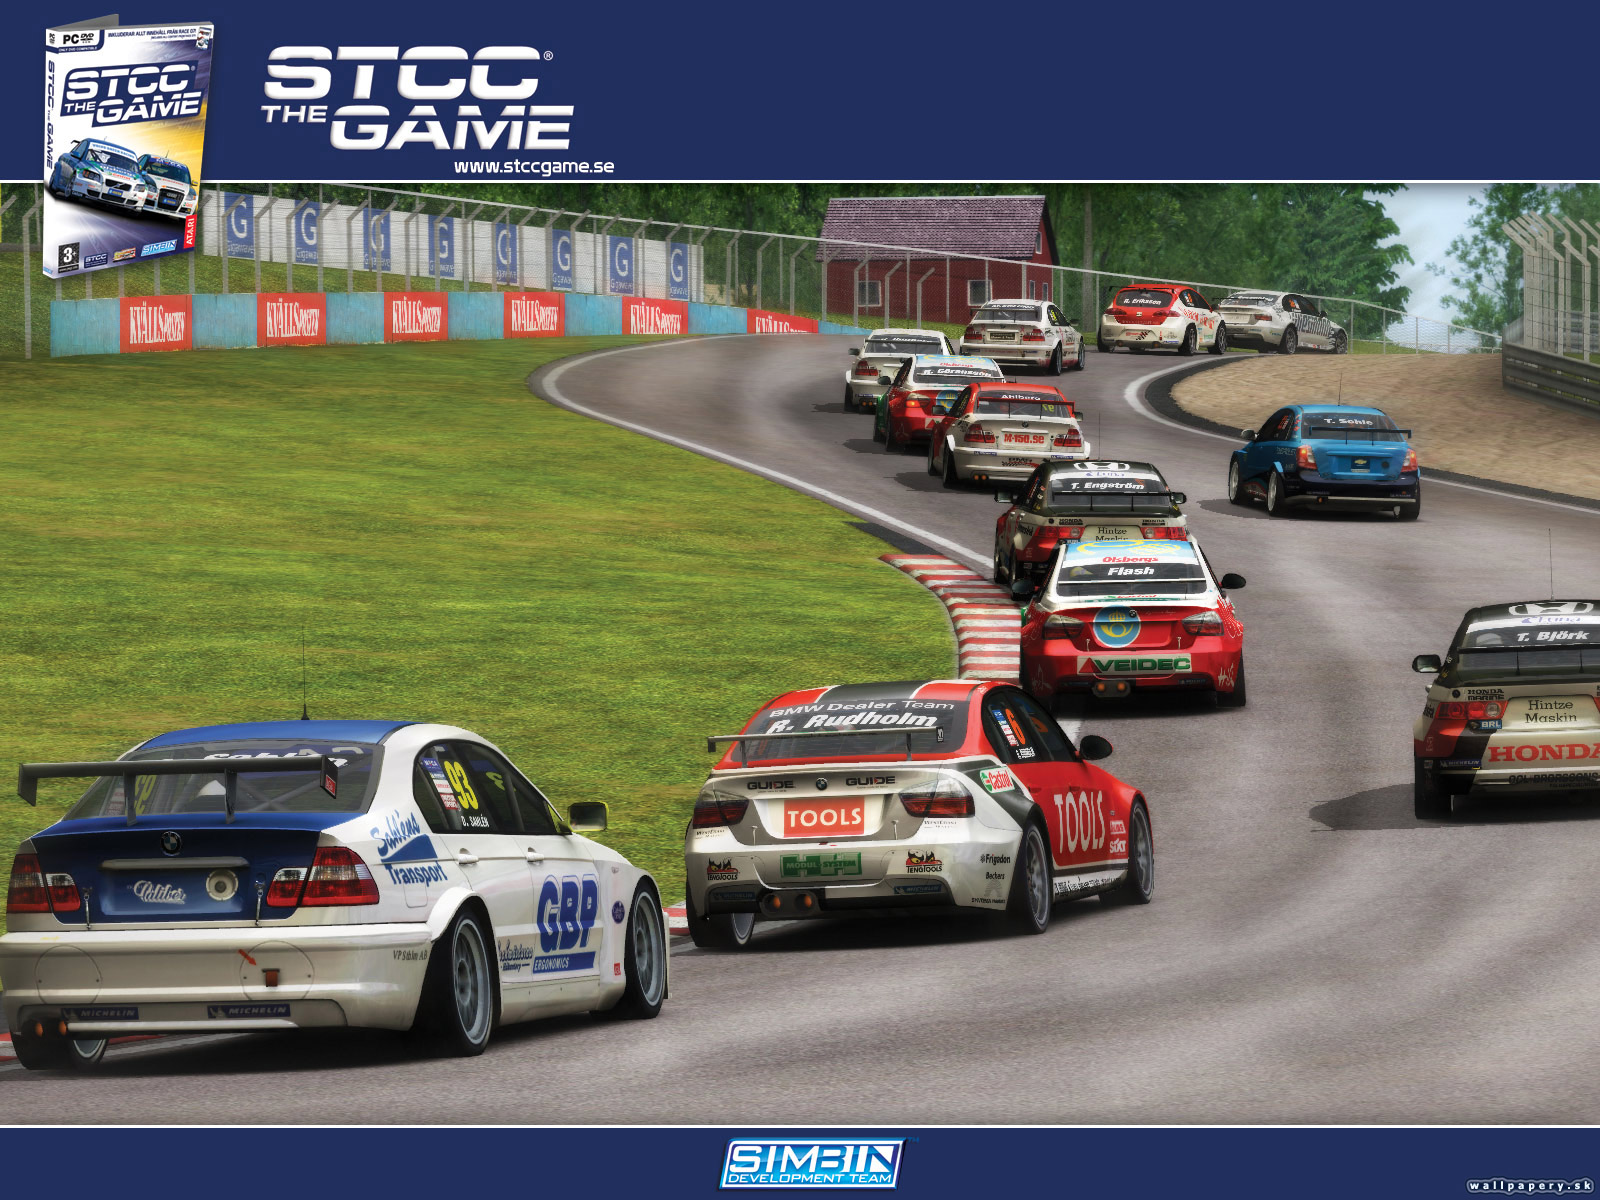 STCC - The Game - wallpaper 2